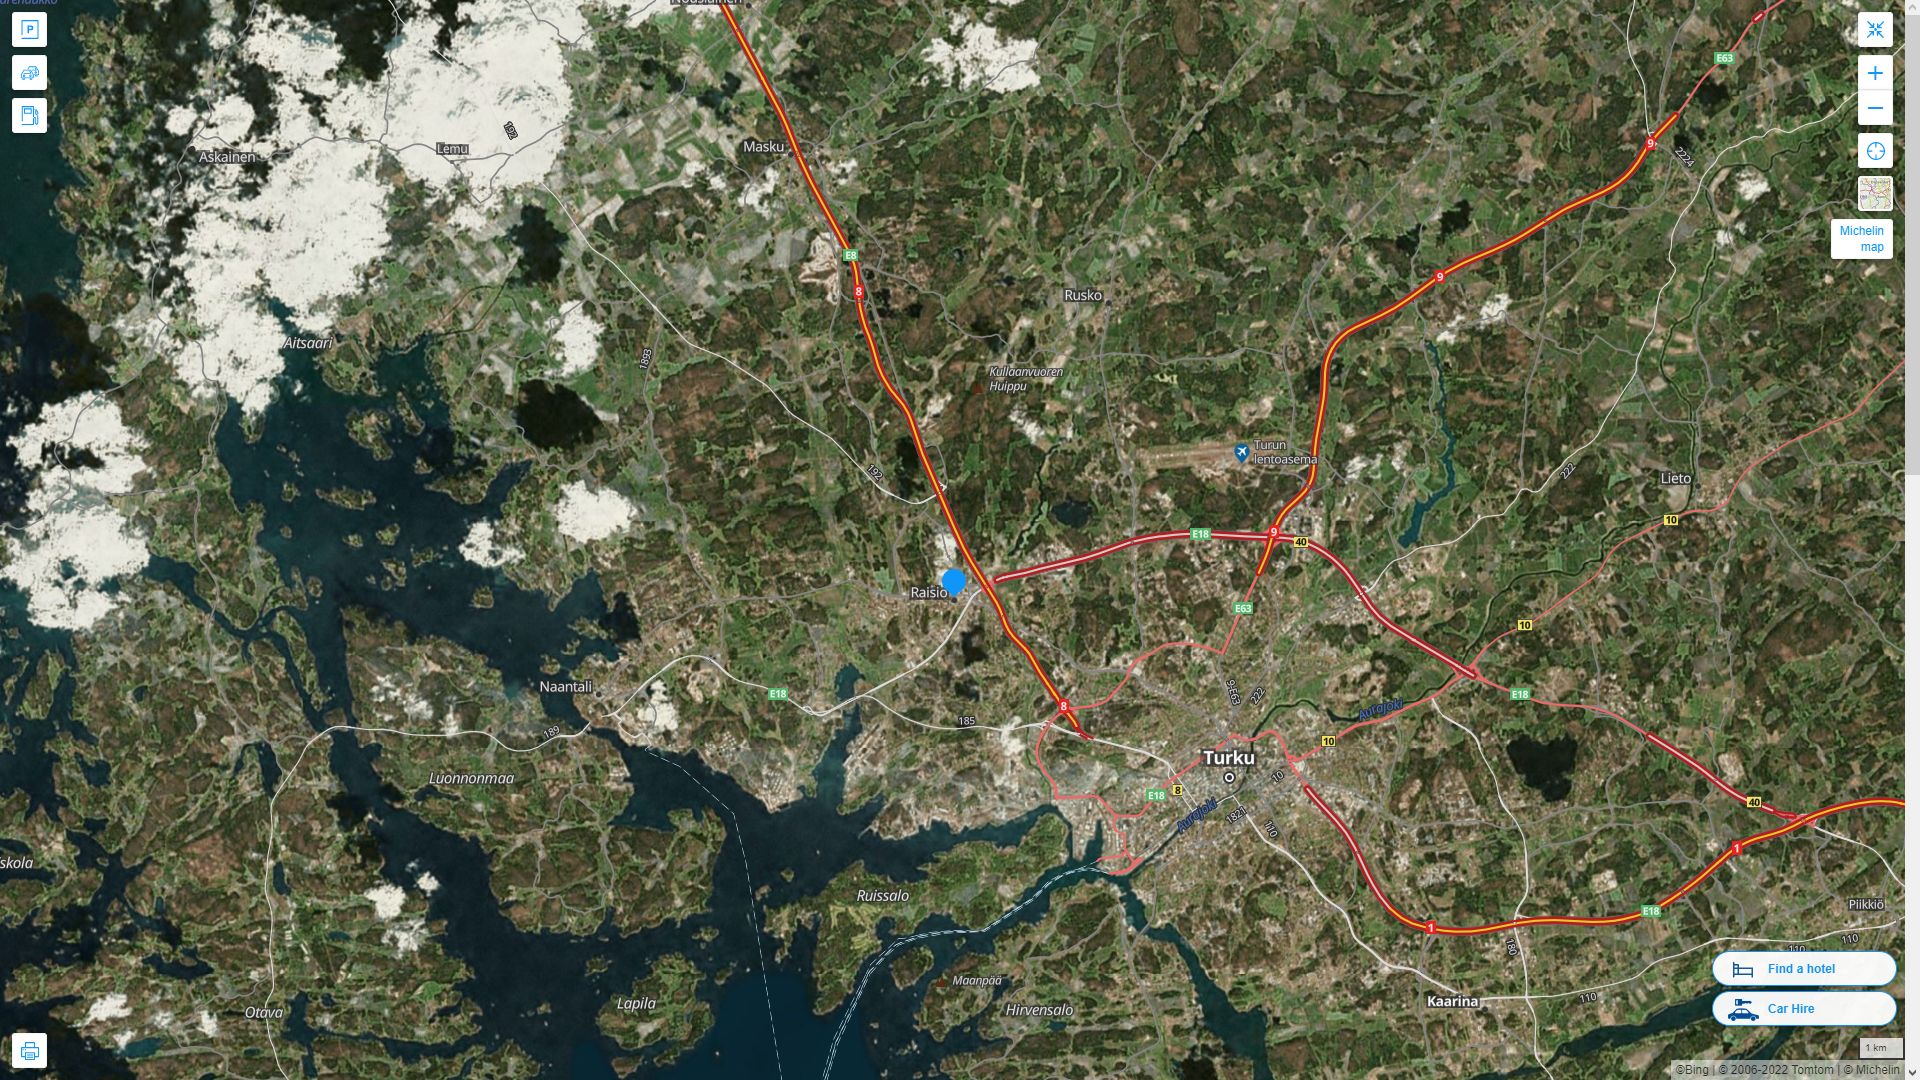 Raisio Finlande Autoroute et carte routiere avec vue satellite